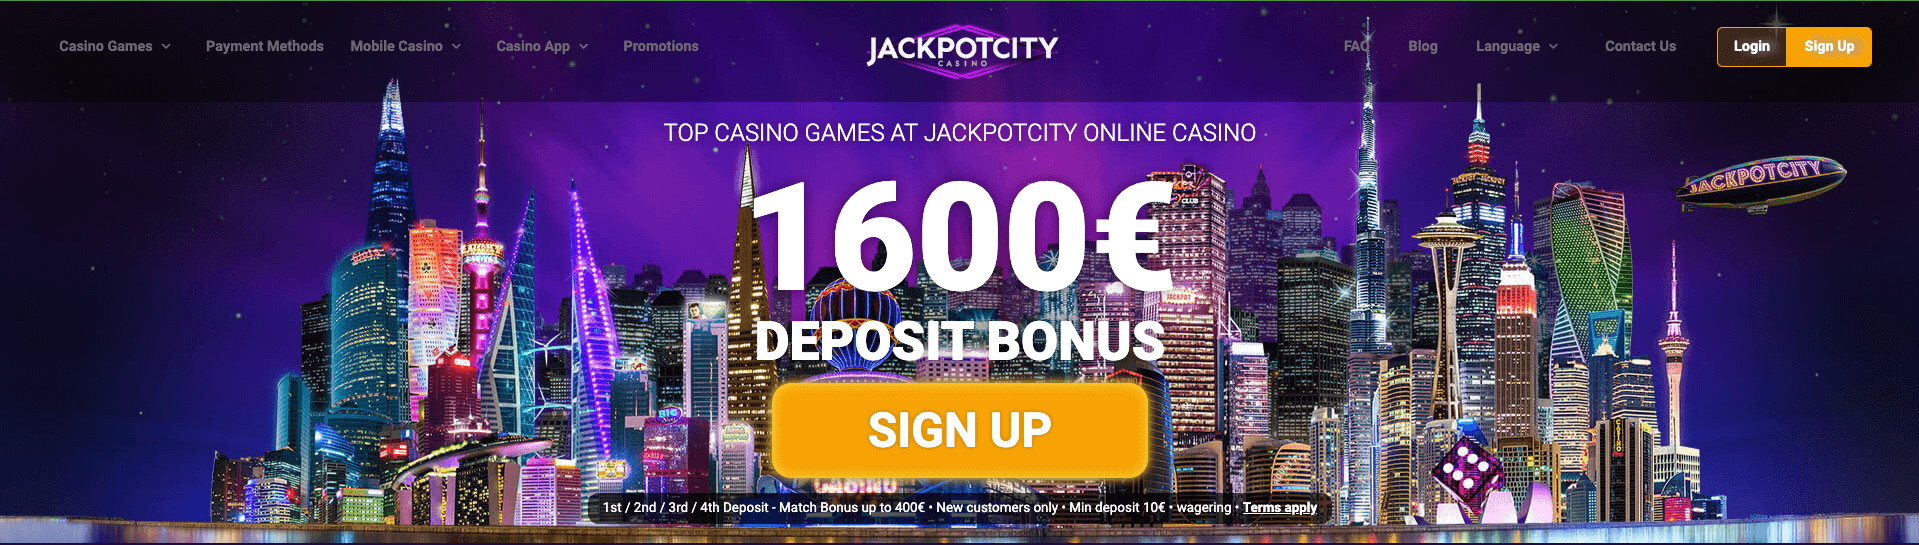 JackpotCity Casino Review - Emirates Casino Review